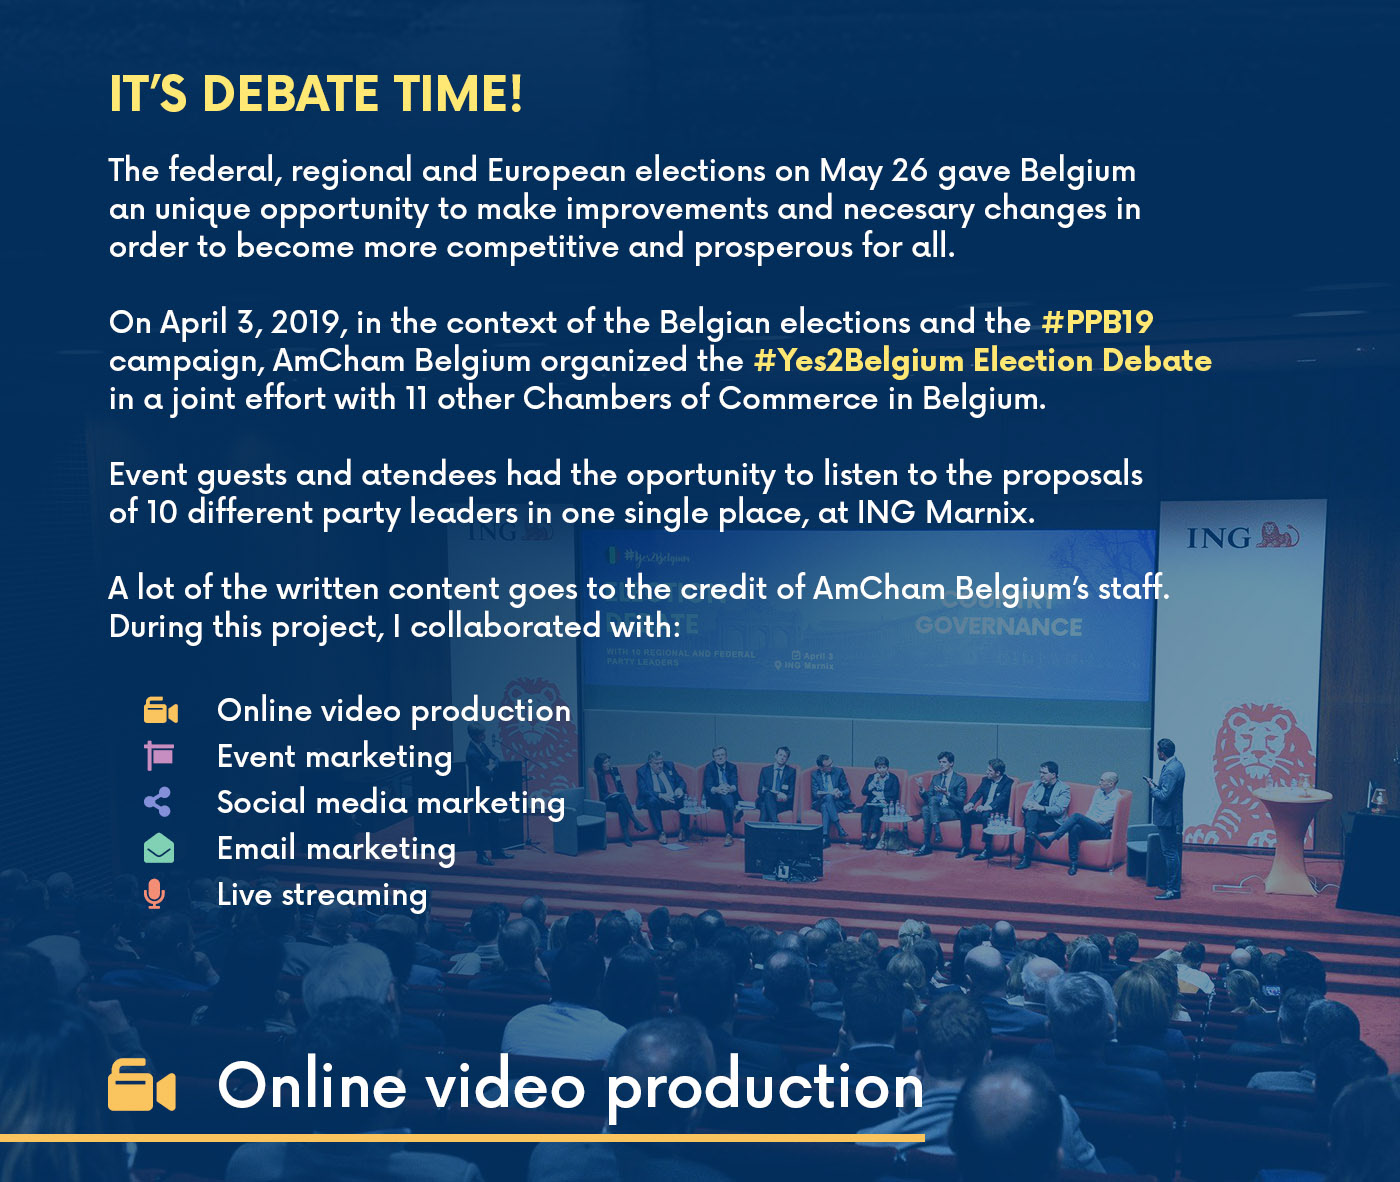 #Yes2Belgium Belgium elections Belgium politics digital marketing election debate European elections Event Video political debate social media marketing campaign